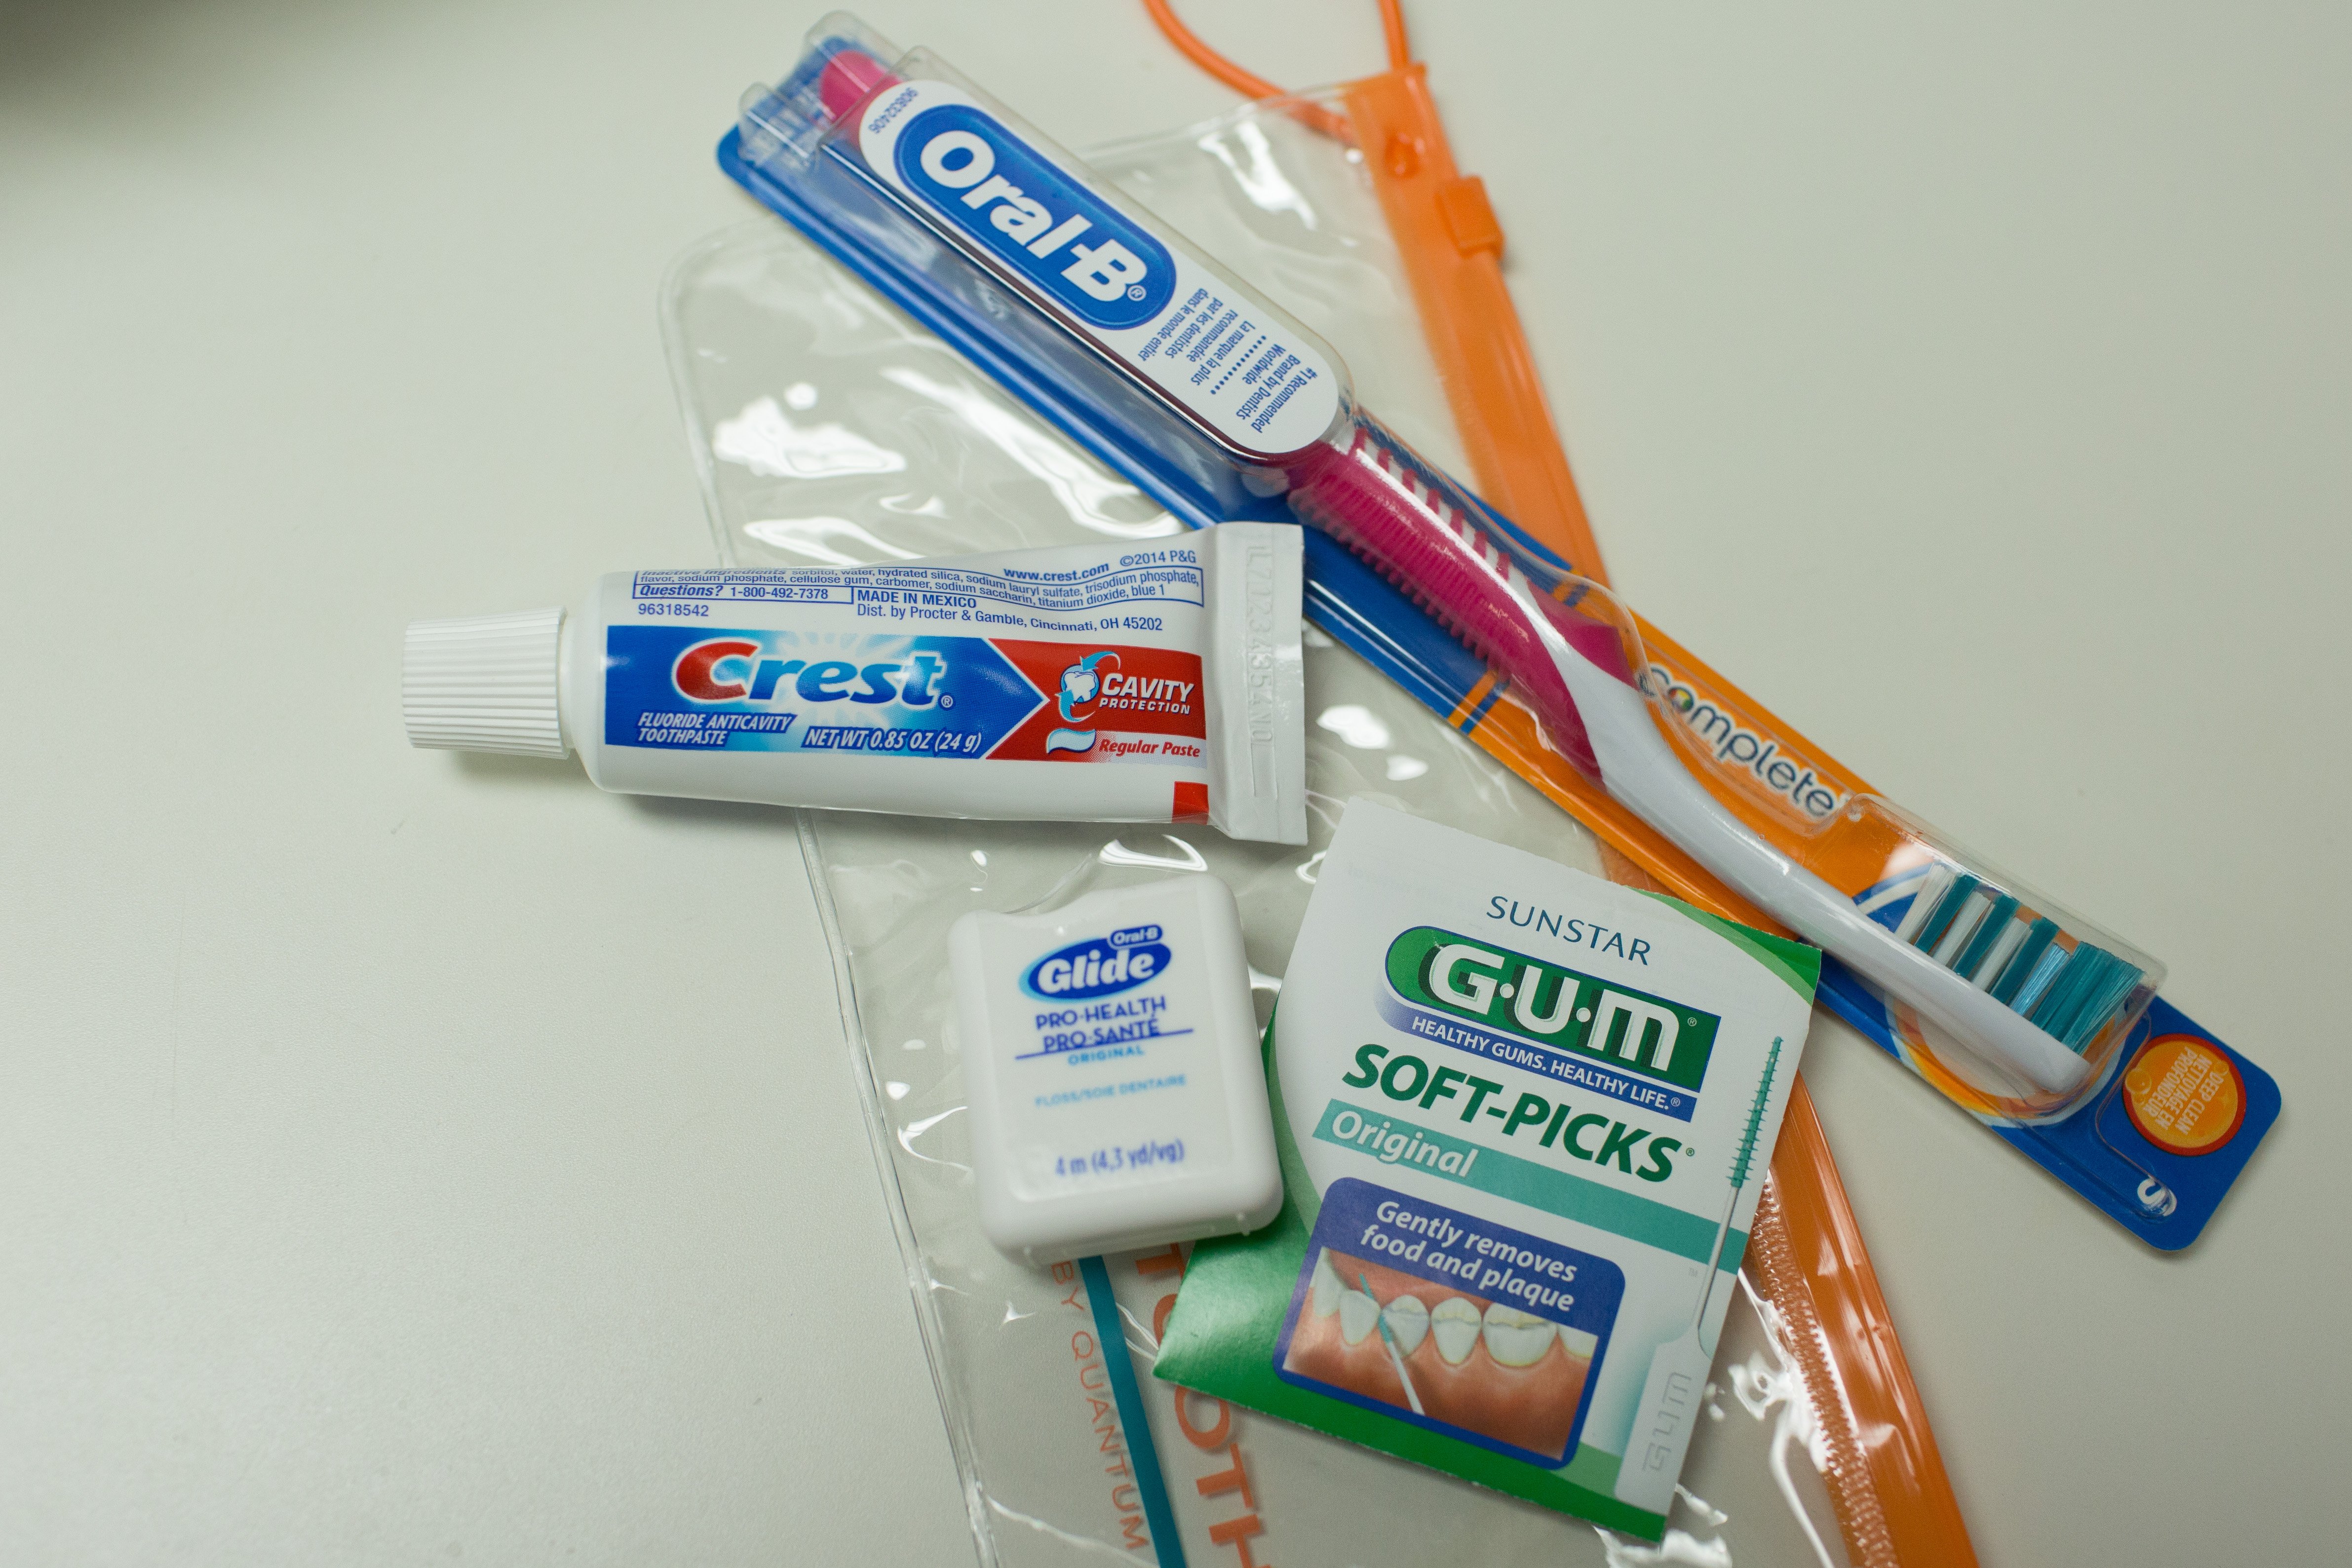 Dental care package of Oral-B brush, Crest Toothpaste, Glide Floss, Sunstar Gum soft-picks